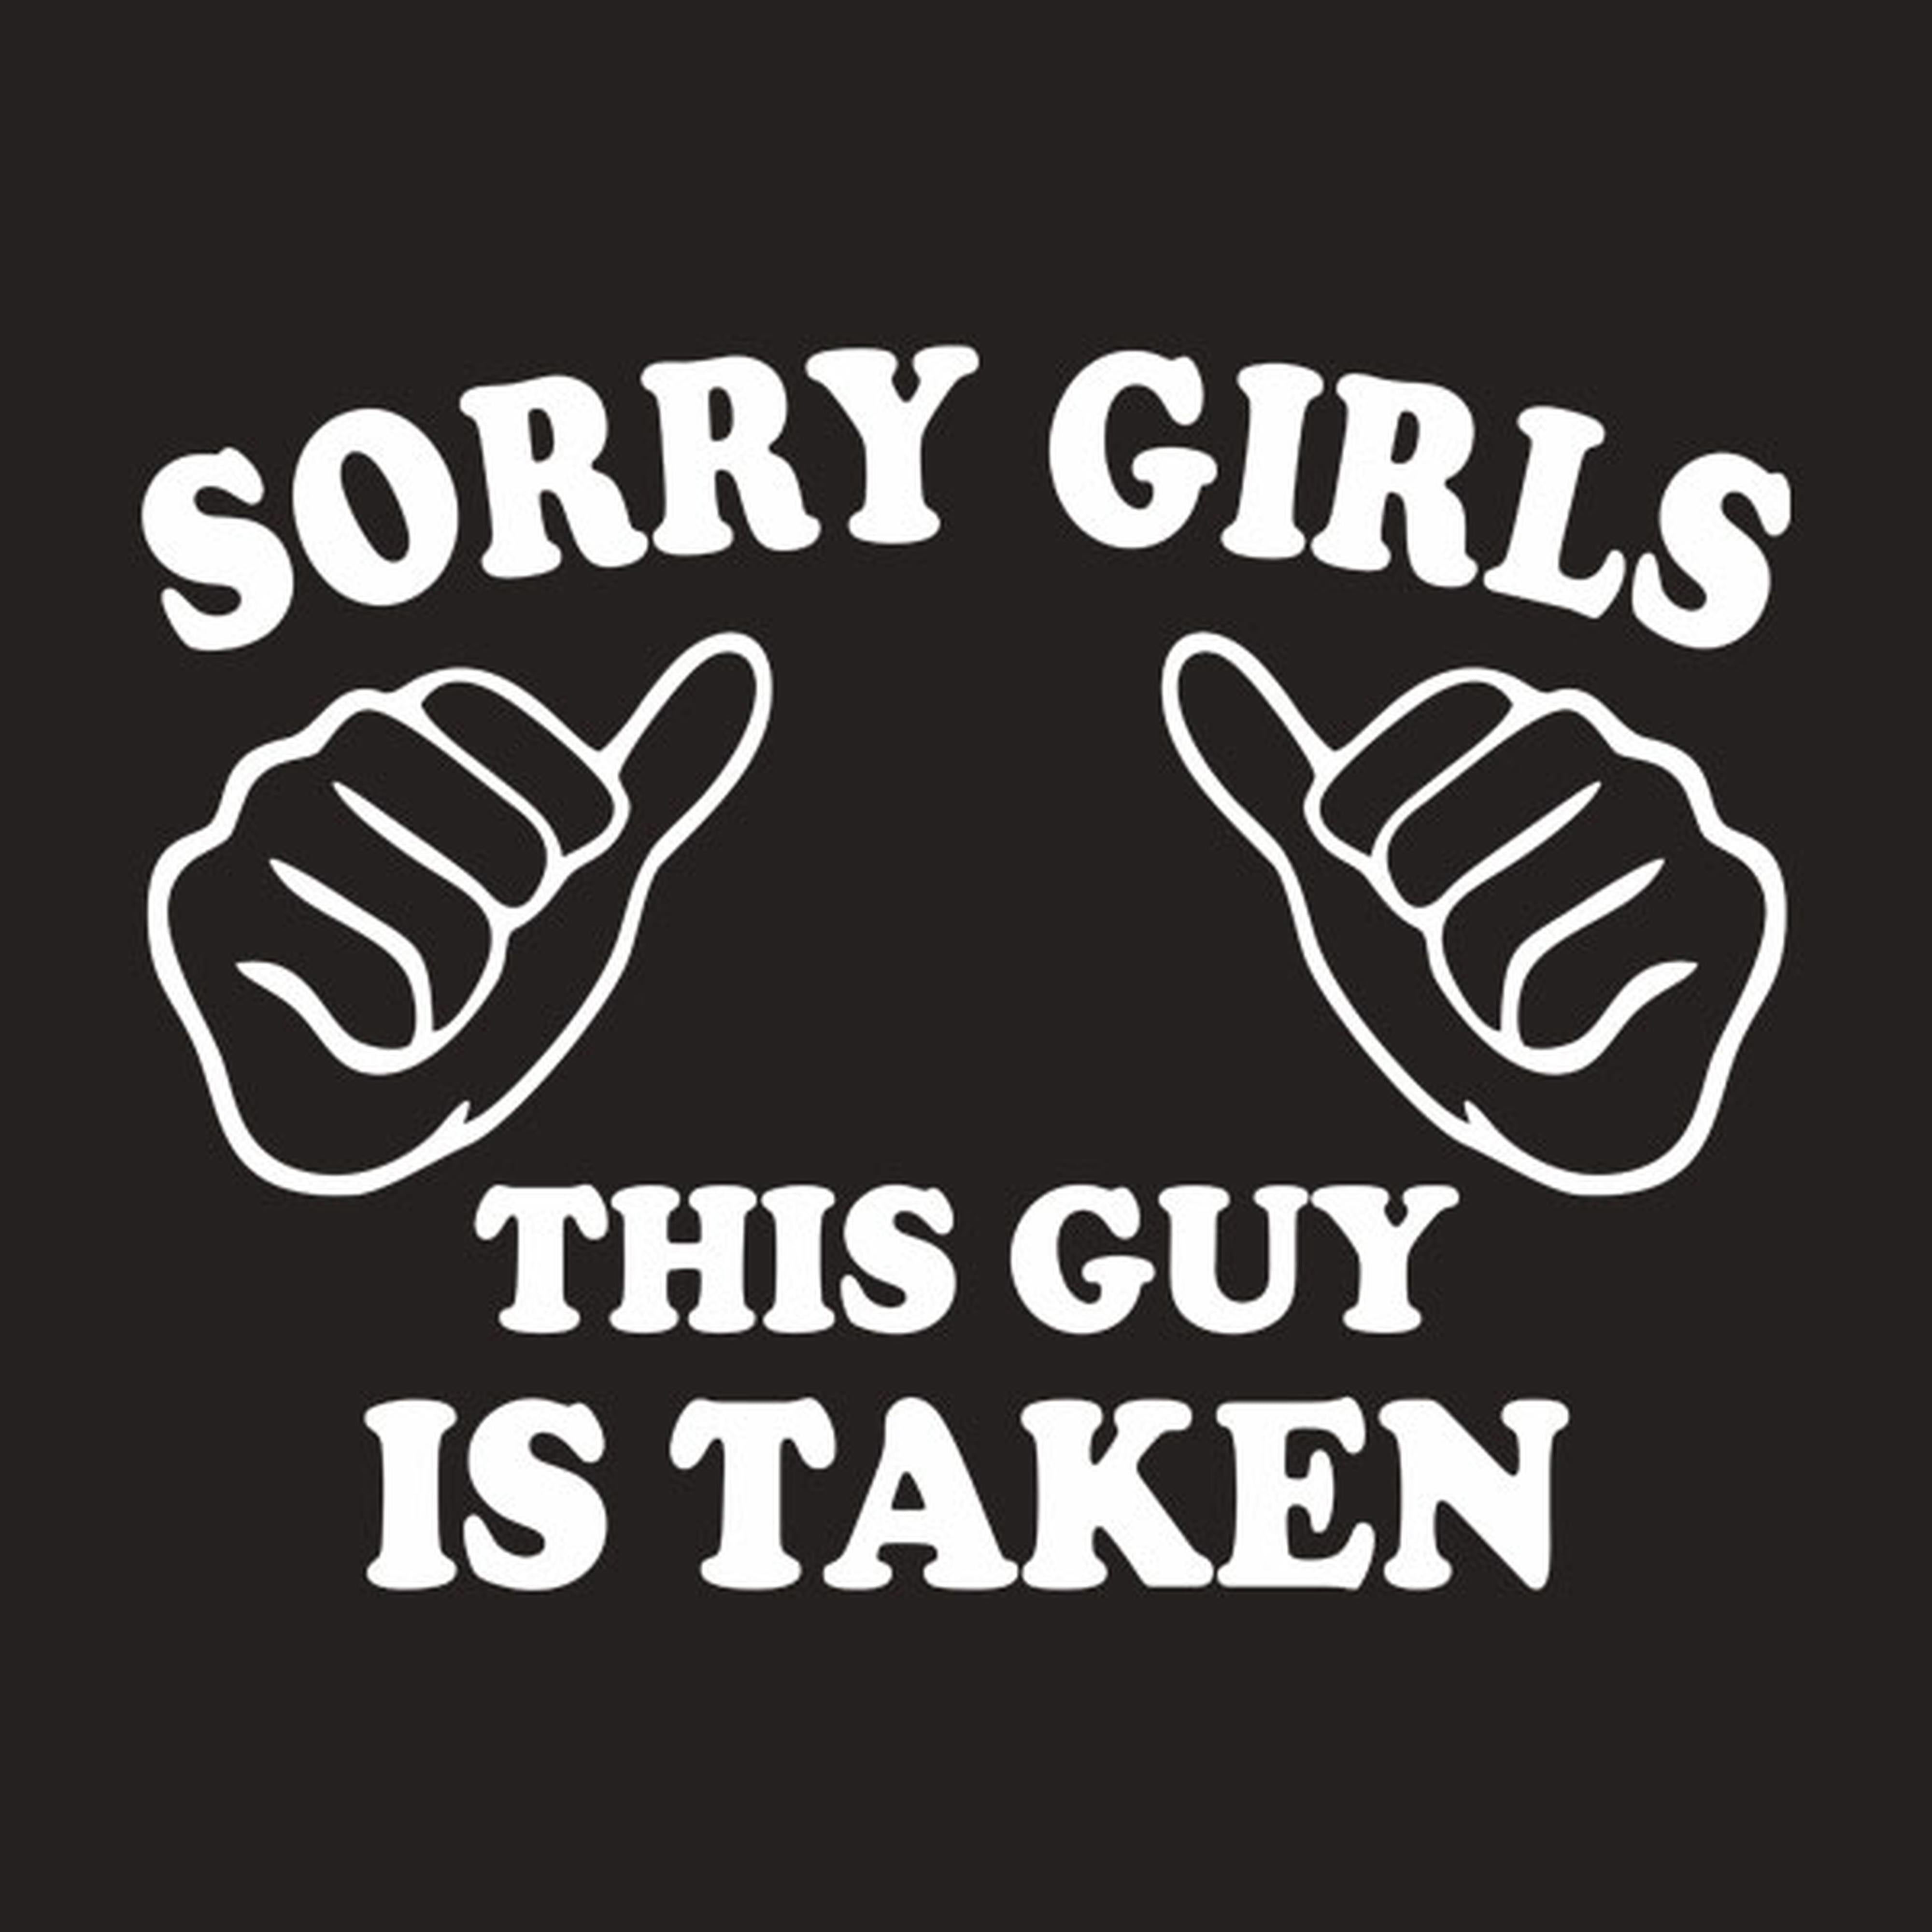 Sorry girls - this guy is taken - T-shirt